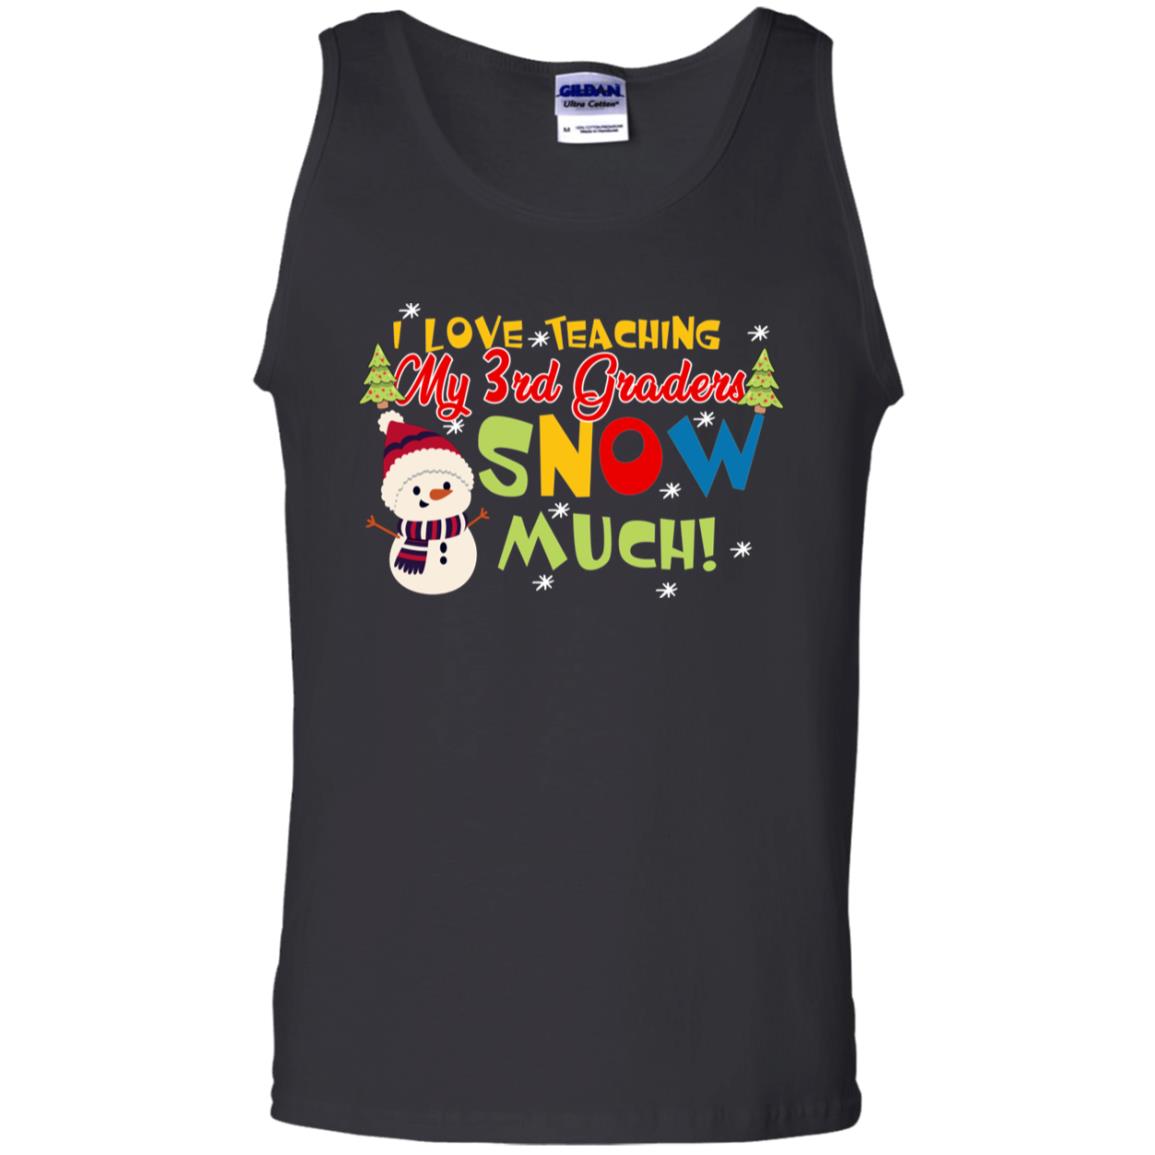 I Love Teaching My 3rd Graders Snow Much X-mas Gift Shirt For TeachersG220 Gildan 100% Cotton Tank Top